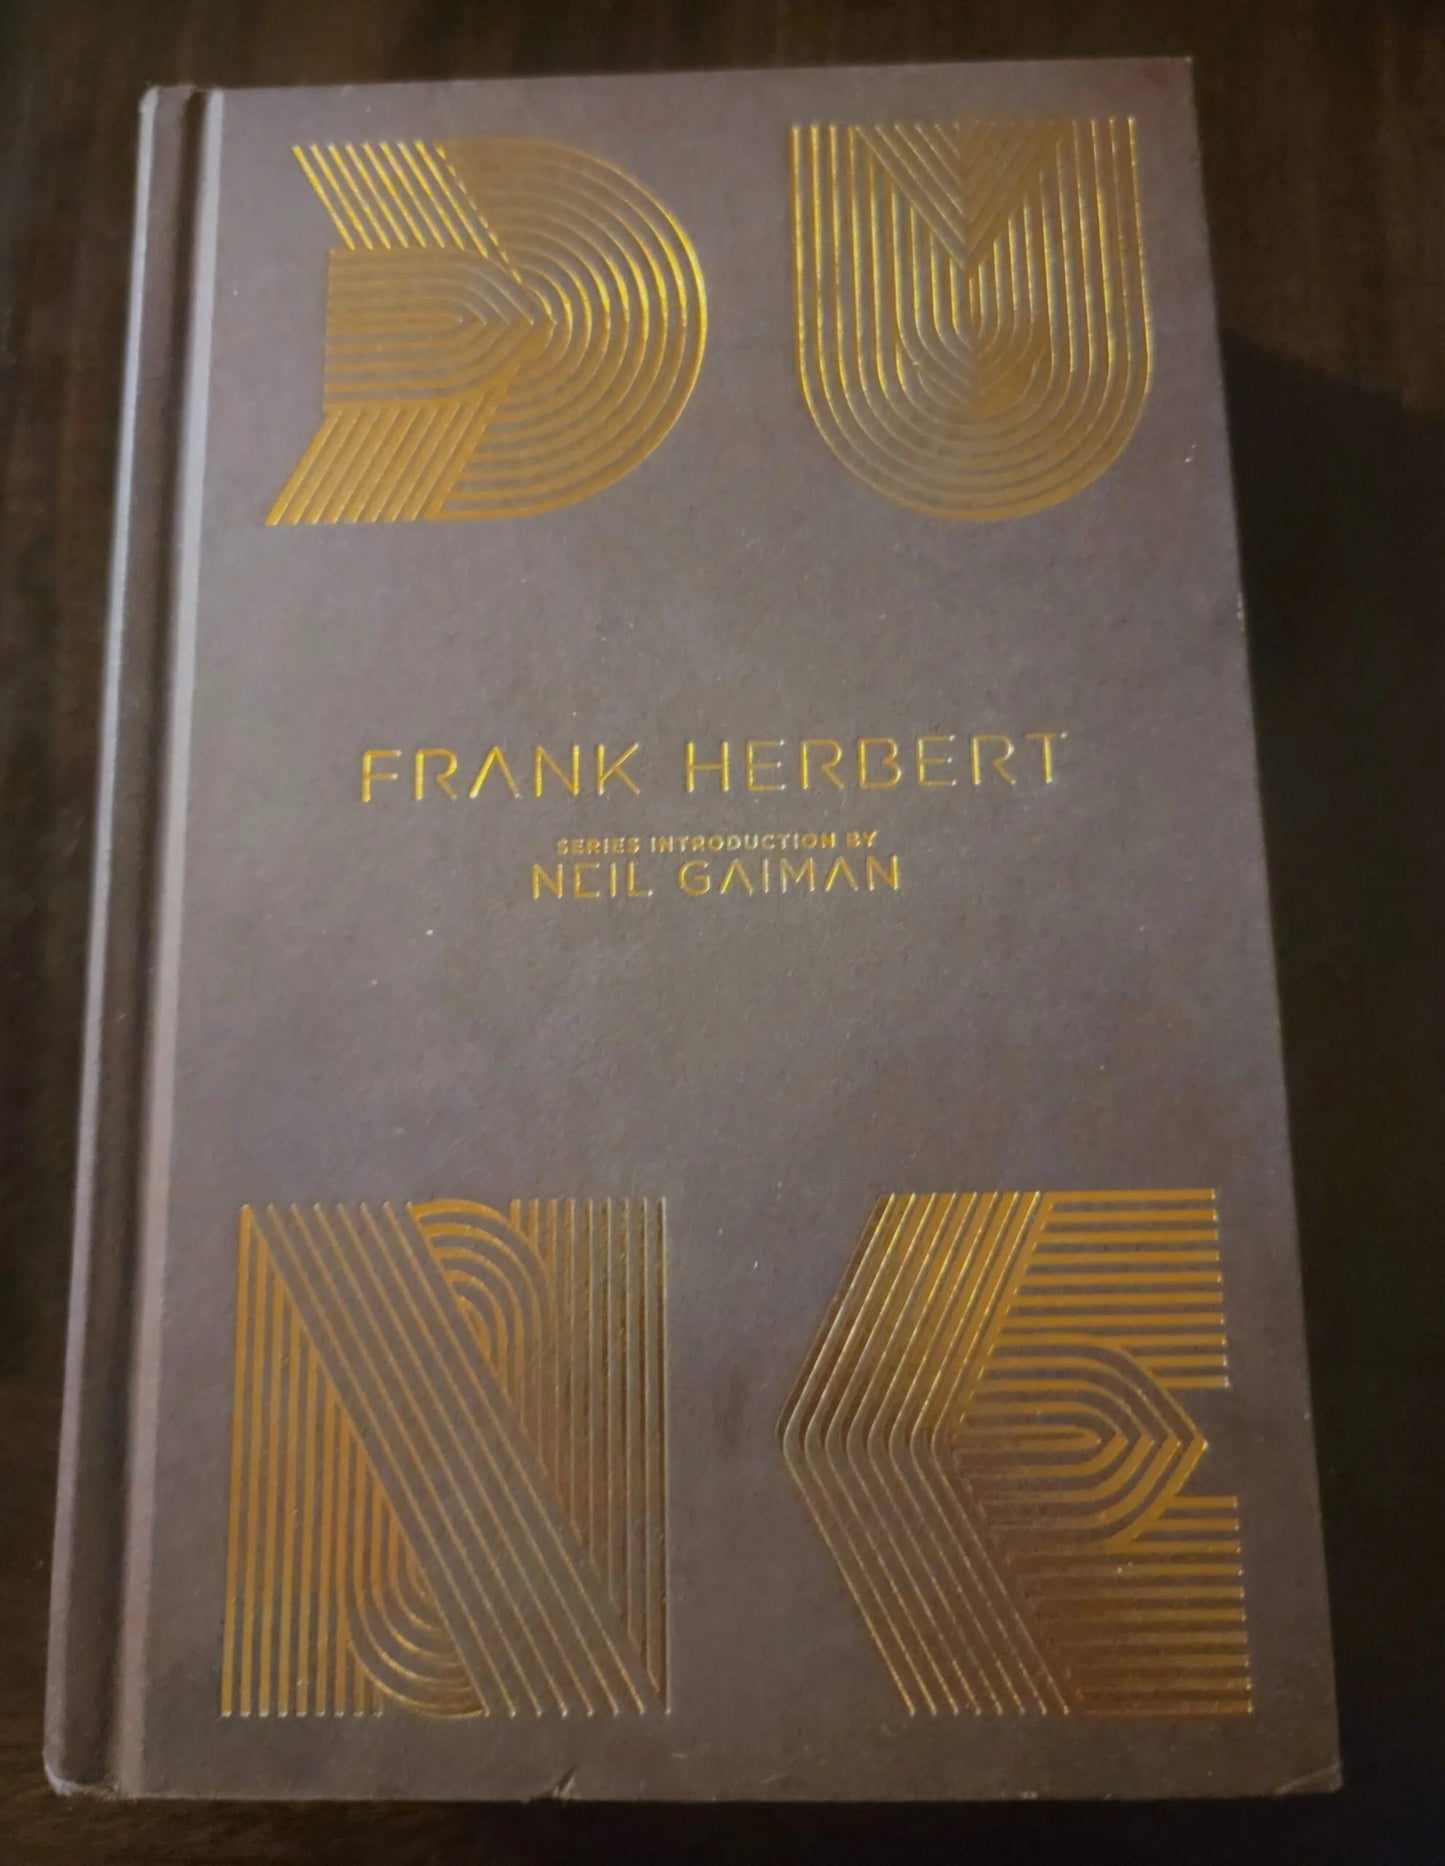 Steady Bunny Shop - Dune - Frank Herbert Series Introduction by Neil Gaiman - Hardcover Book - Steady Bunny Shop